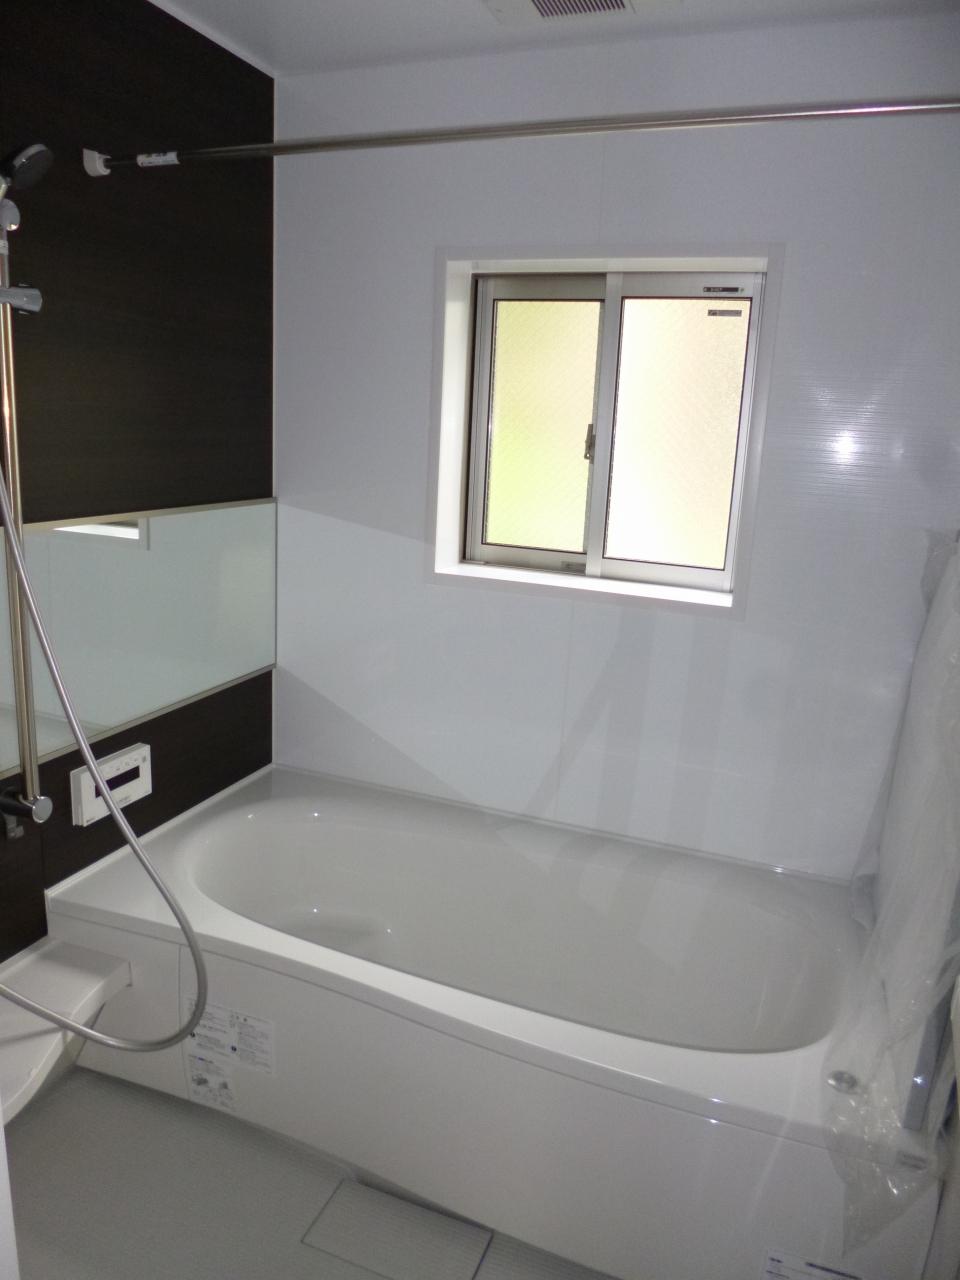 Bathroom. Bathroom ventilation drying function with bus